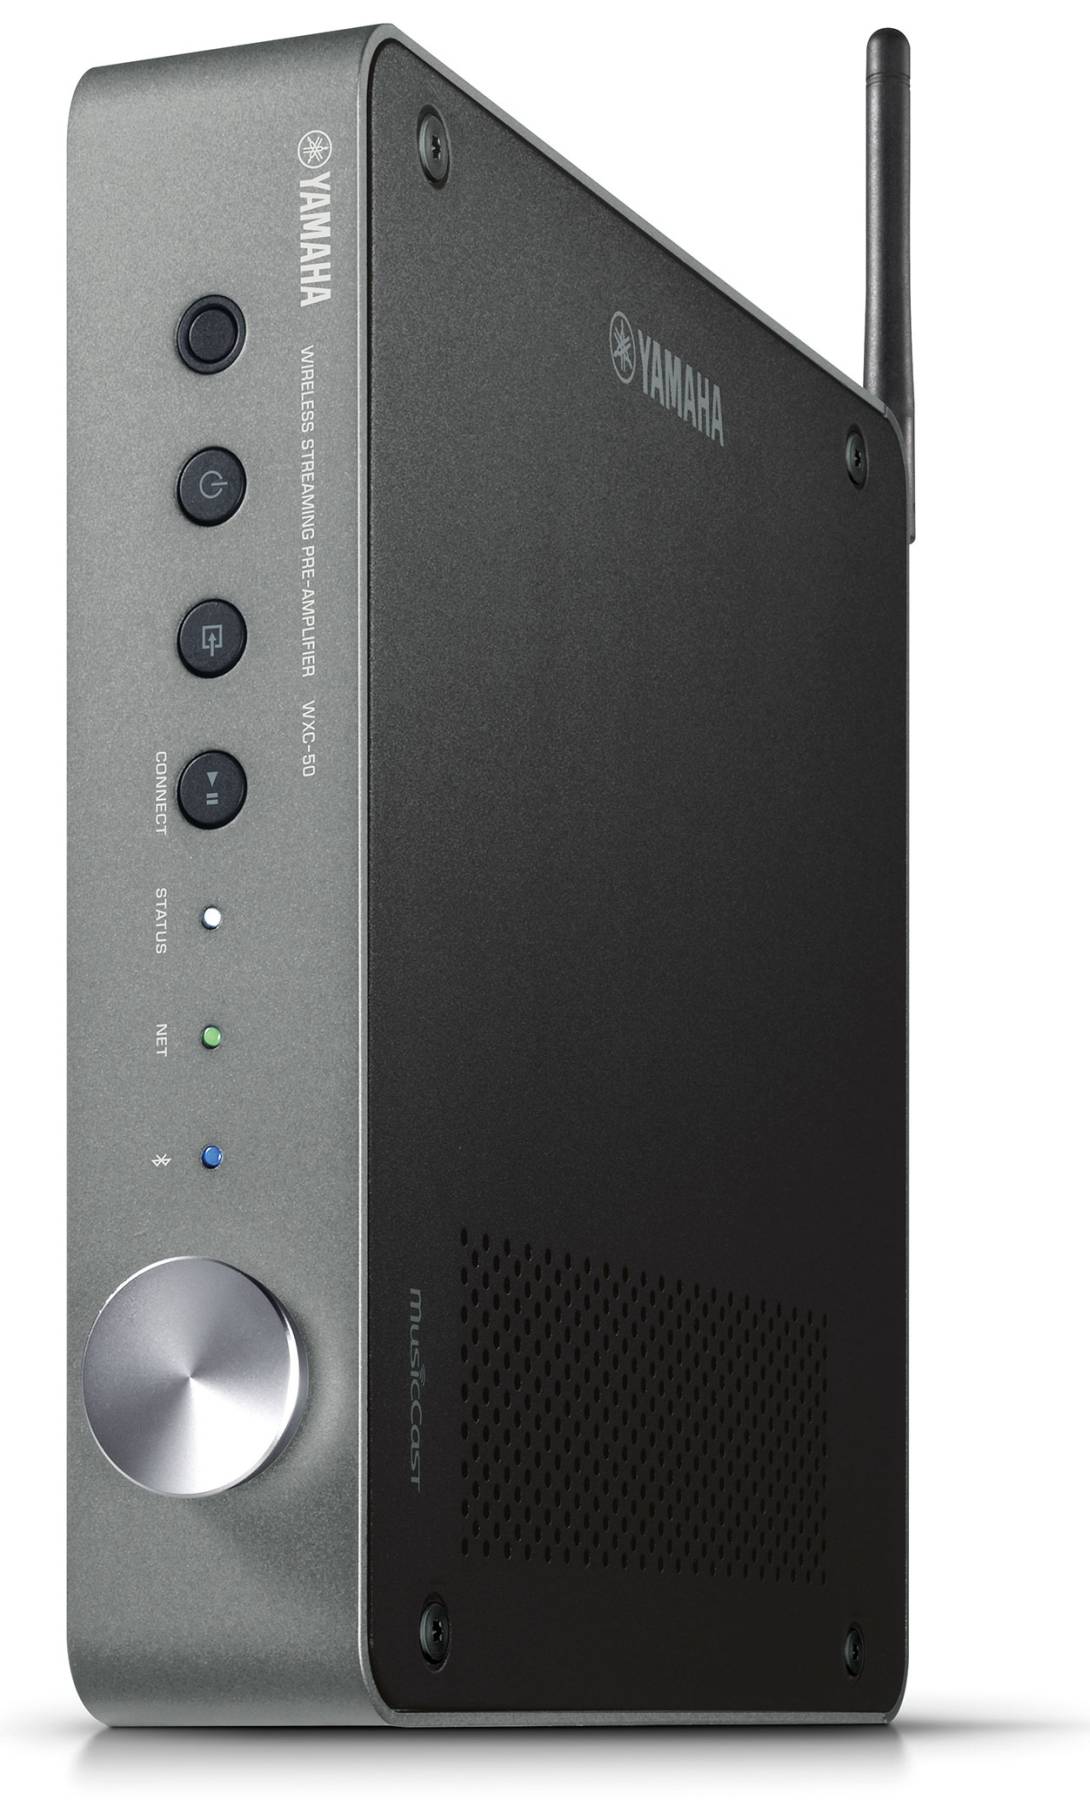 Yamaha WX-C50 - Audio streamer